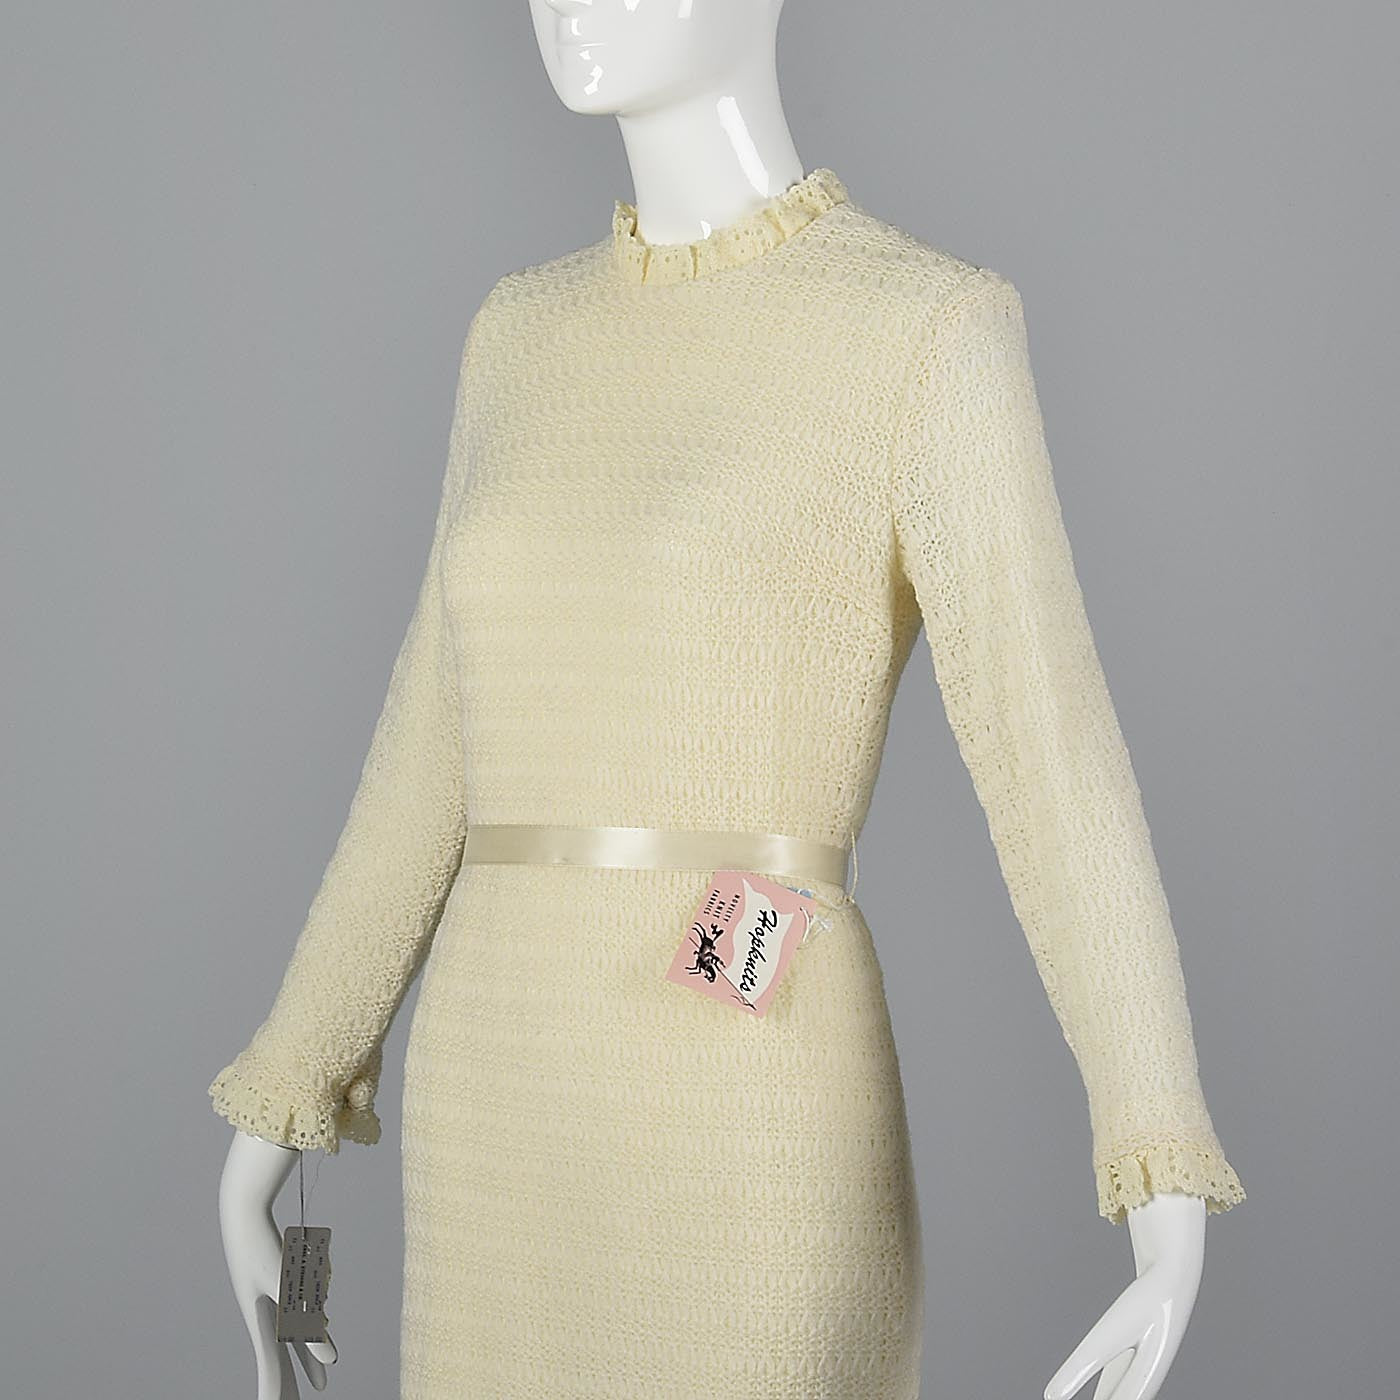 1960s Deadstock Cream Sweater Dress